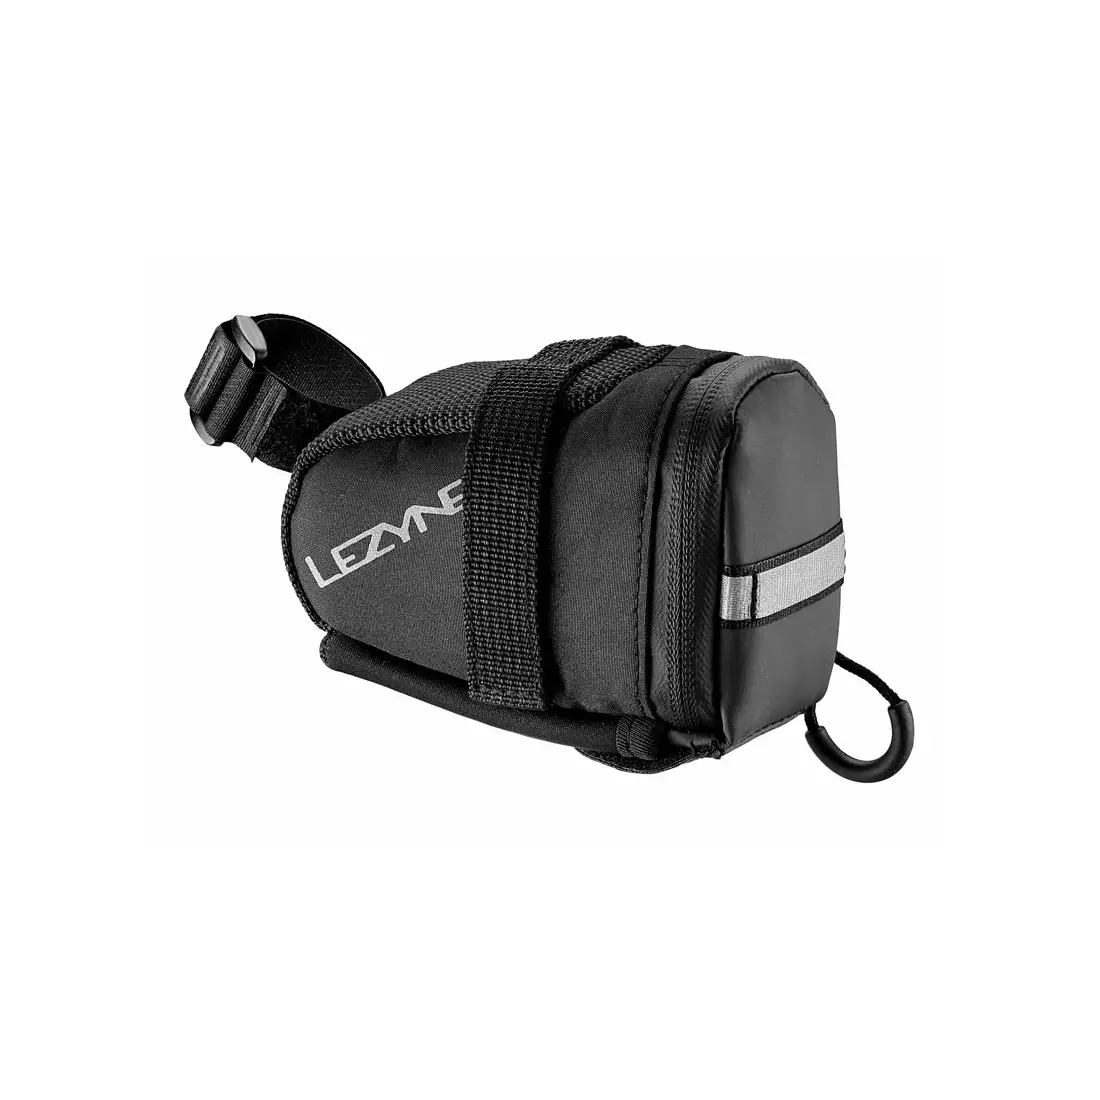 LEZYNE sedlová taška S-CADDY černá, vodotěsná poj: 0,5L/70g